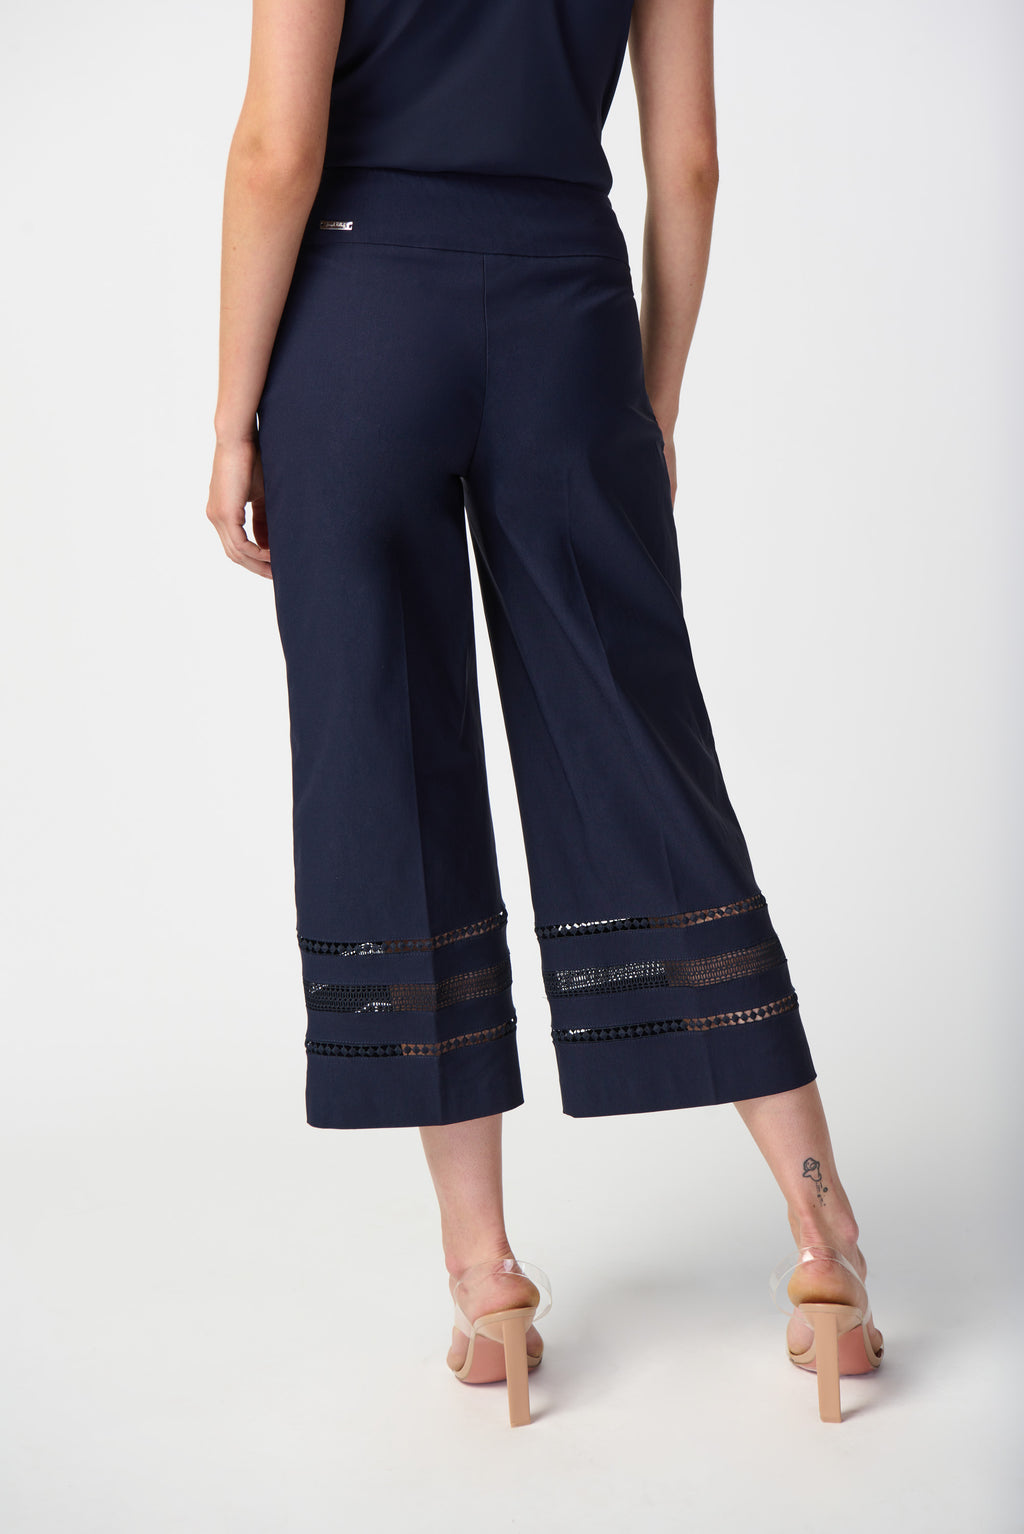 Joseph Ribkoff Midnight Blue Culotte Pants Style 241073